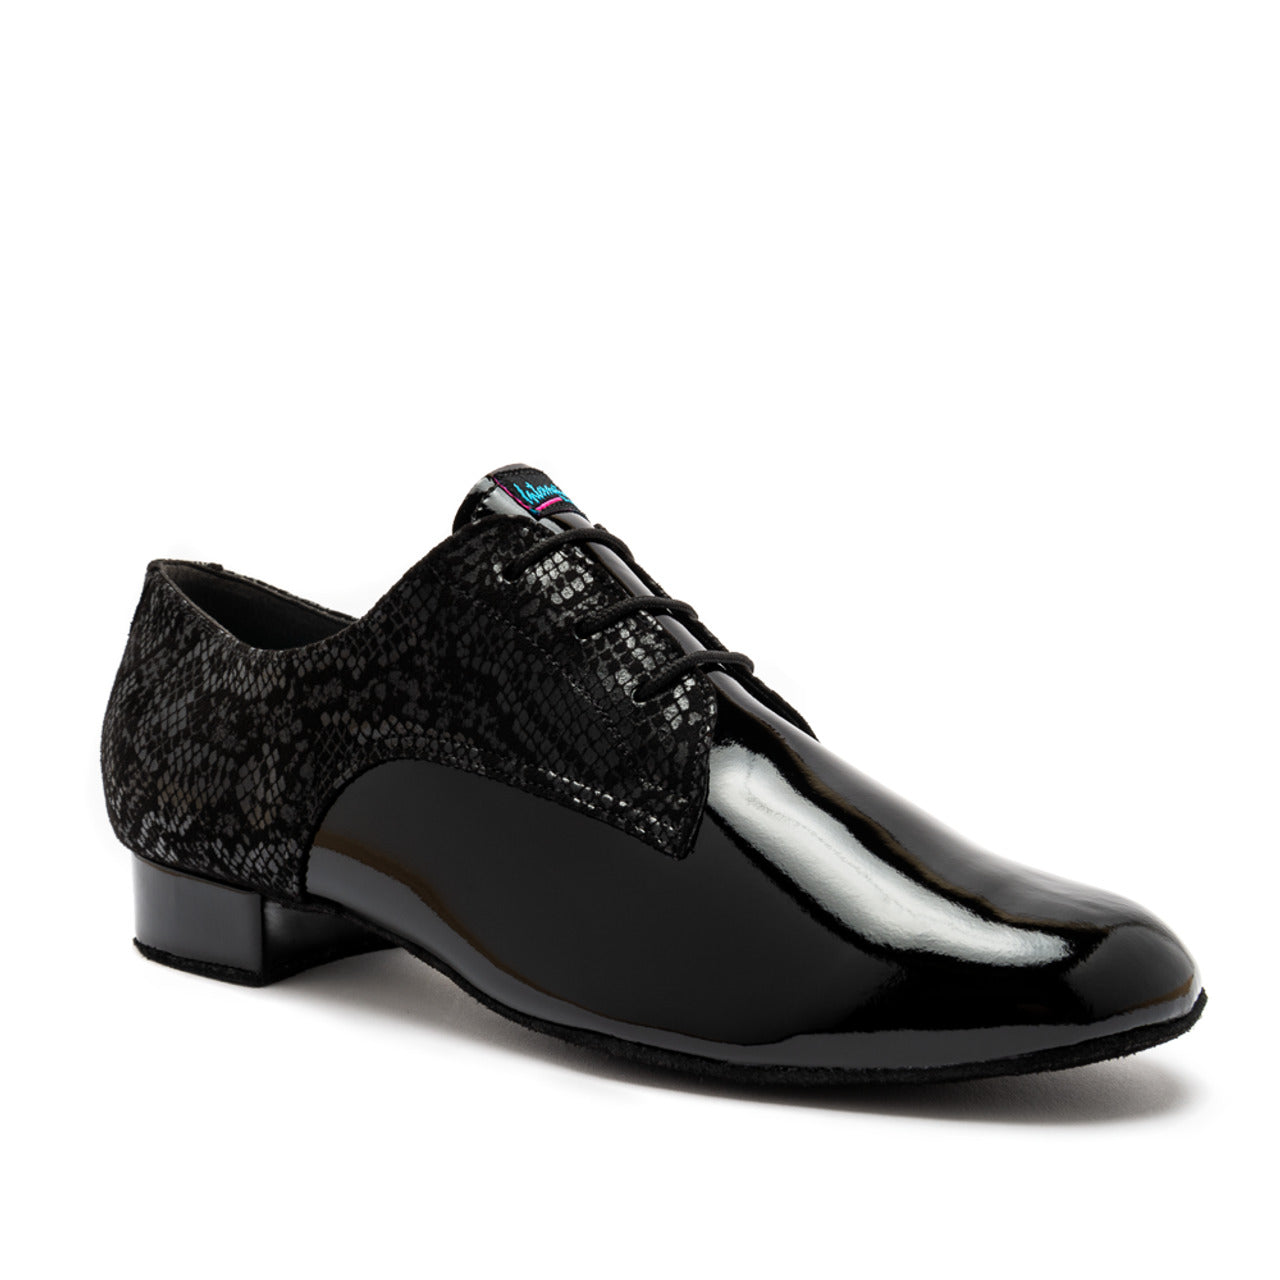 International Dance Shoes, Gibson, Black Snake/Patent Leather, 1” Heel